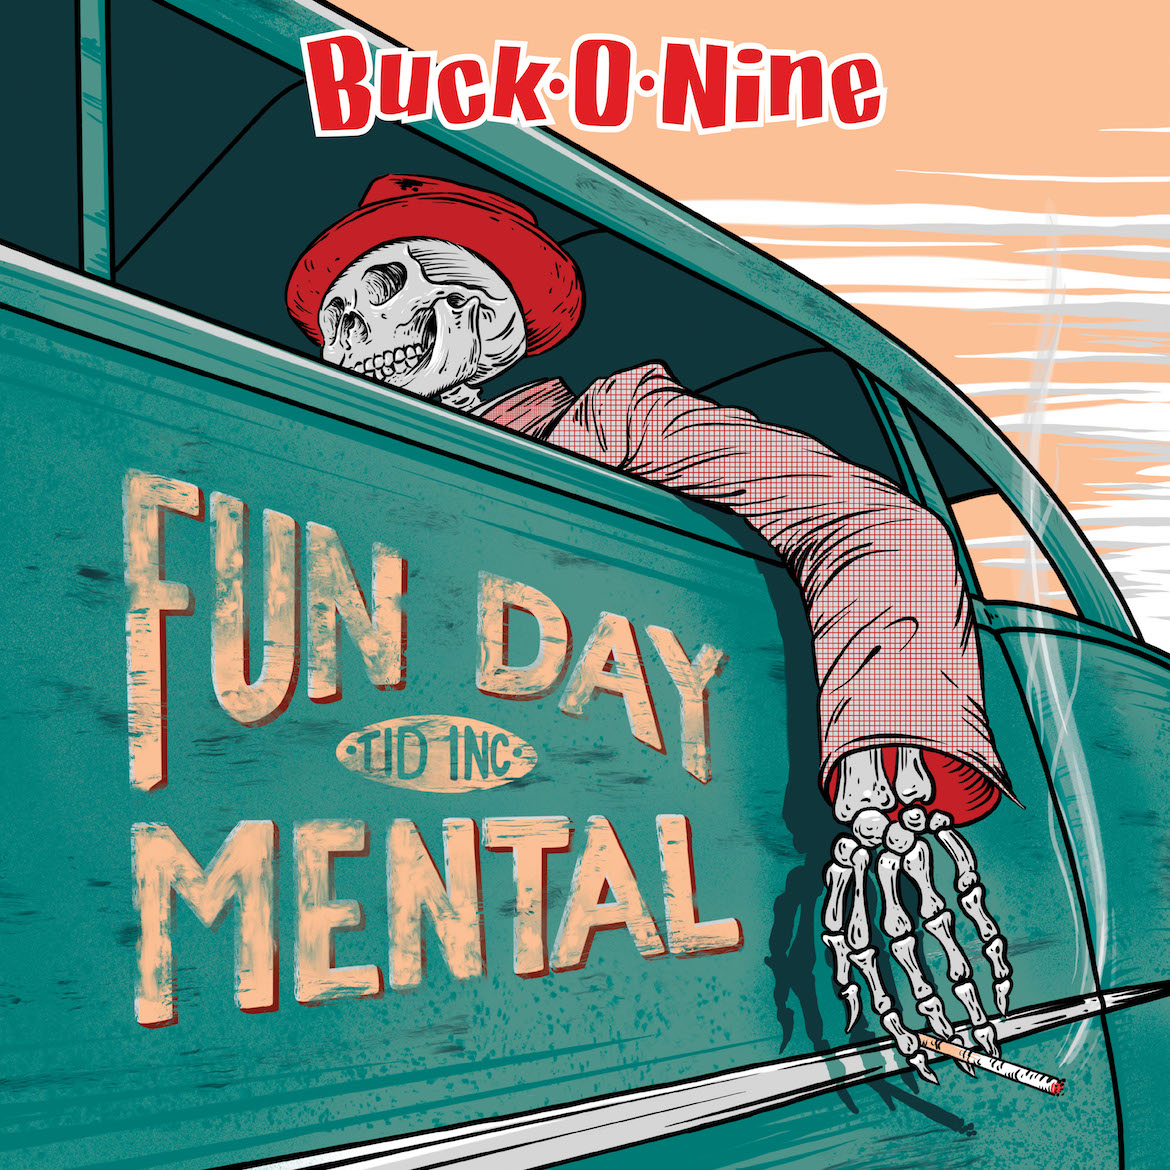 Buck-O-Nine on Selective Memory